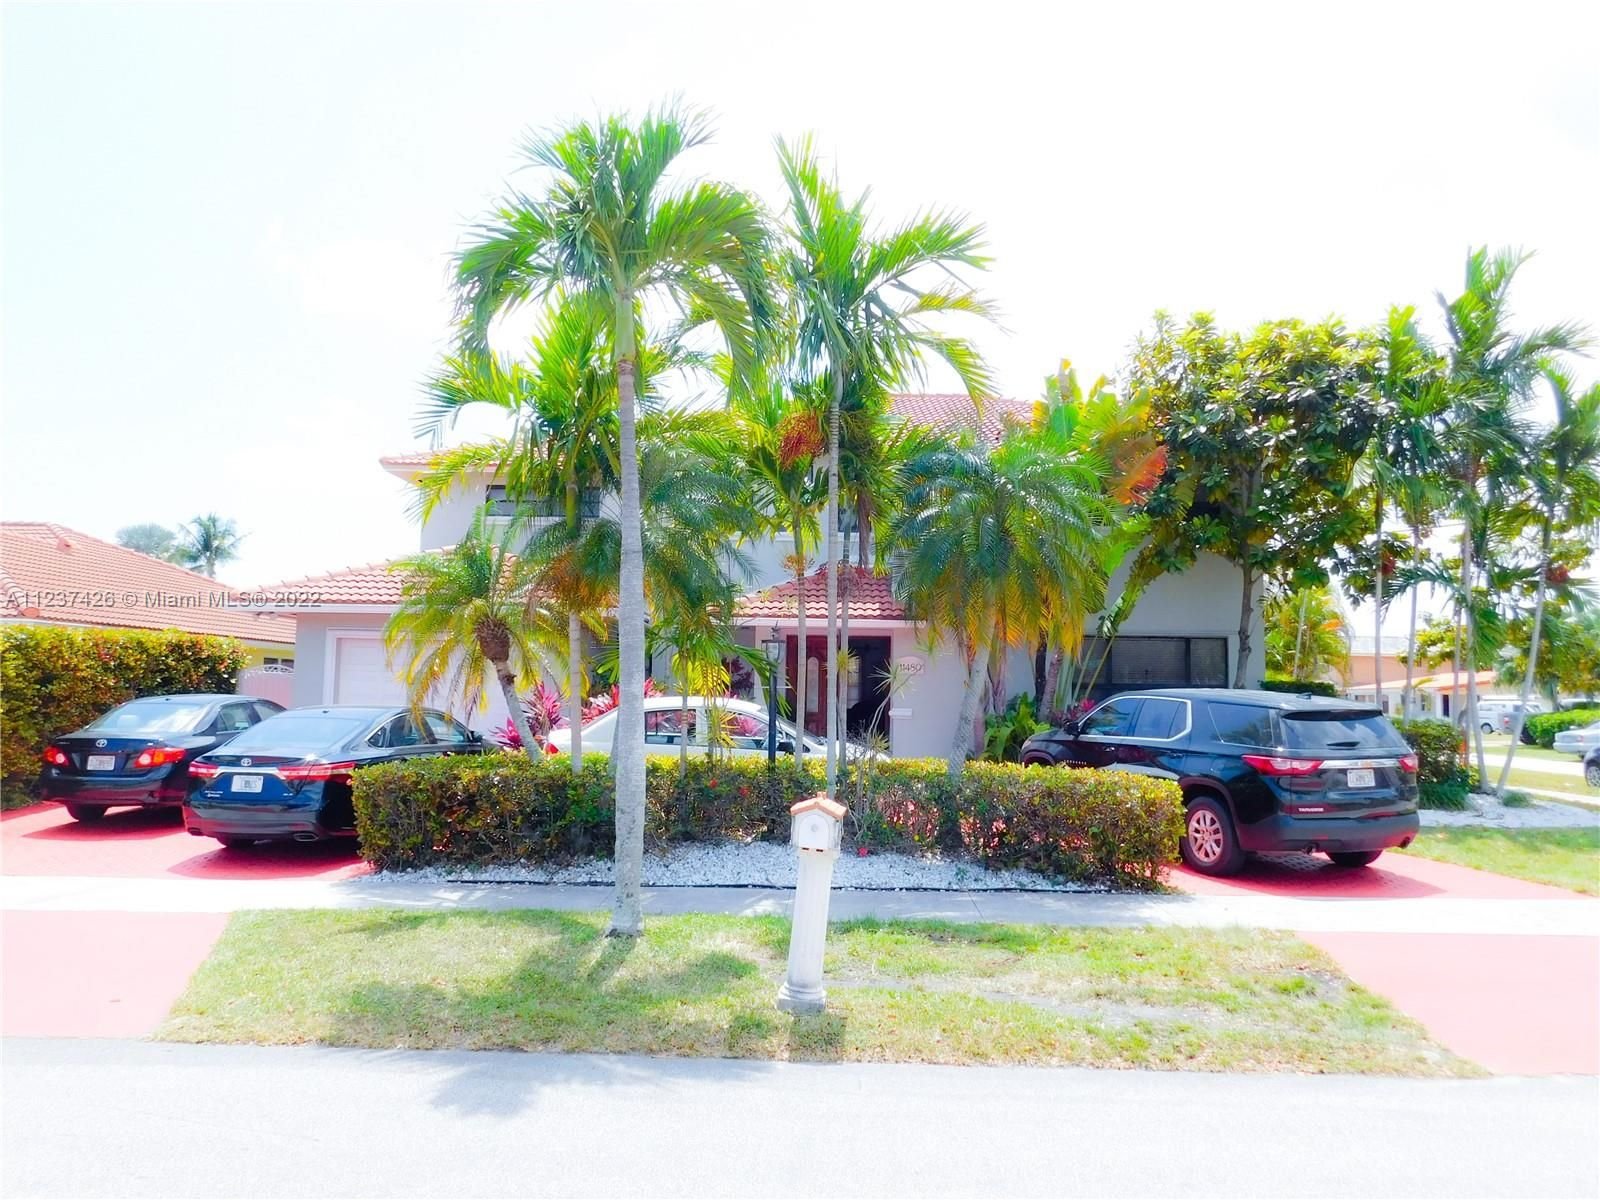 Real estate property located at 11480 28th St, Miami-Dade County, Miami, FL